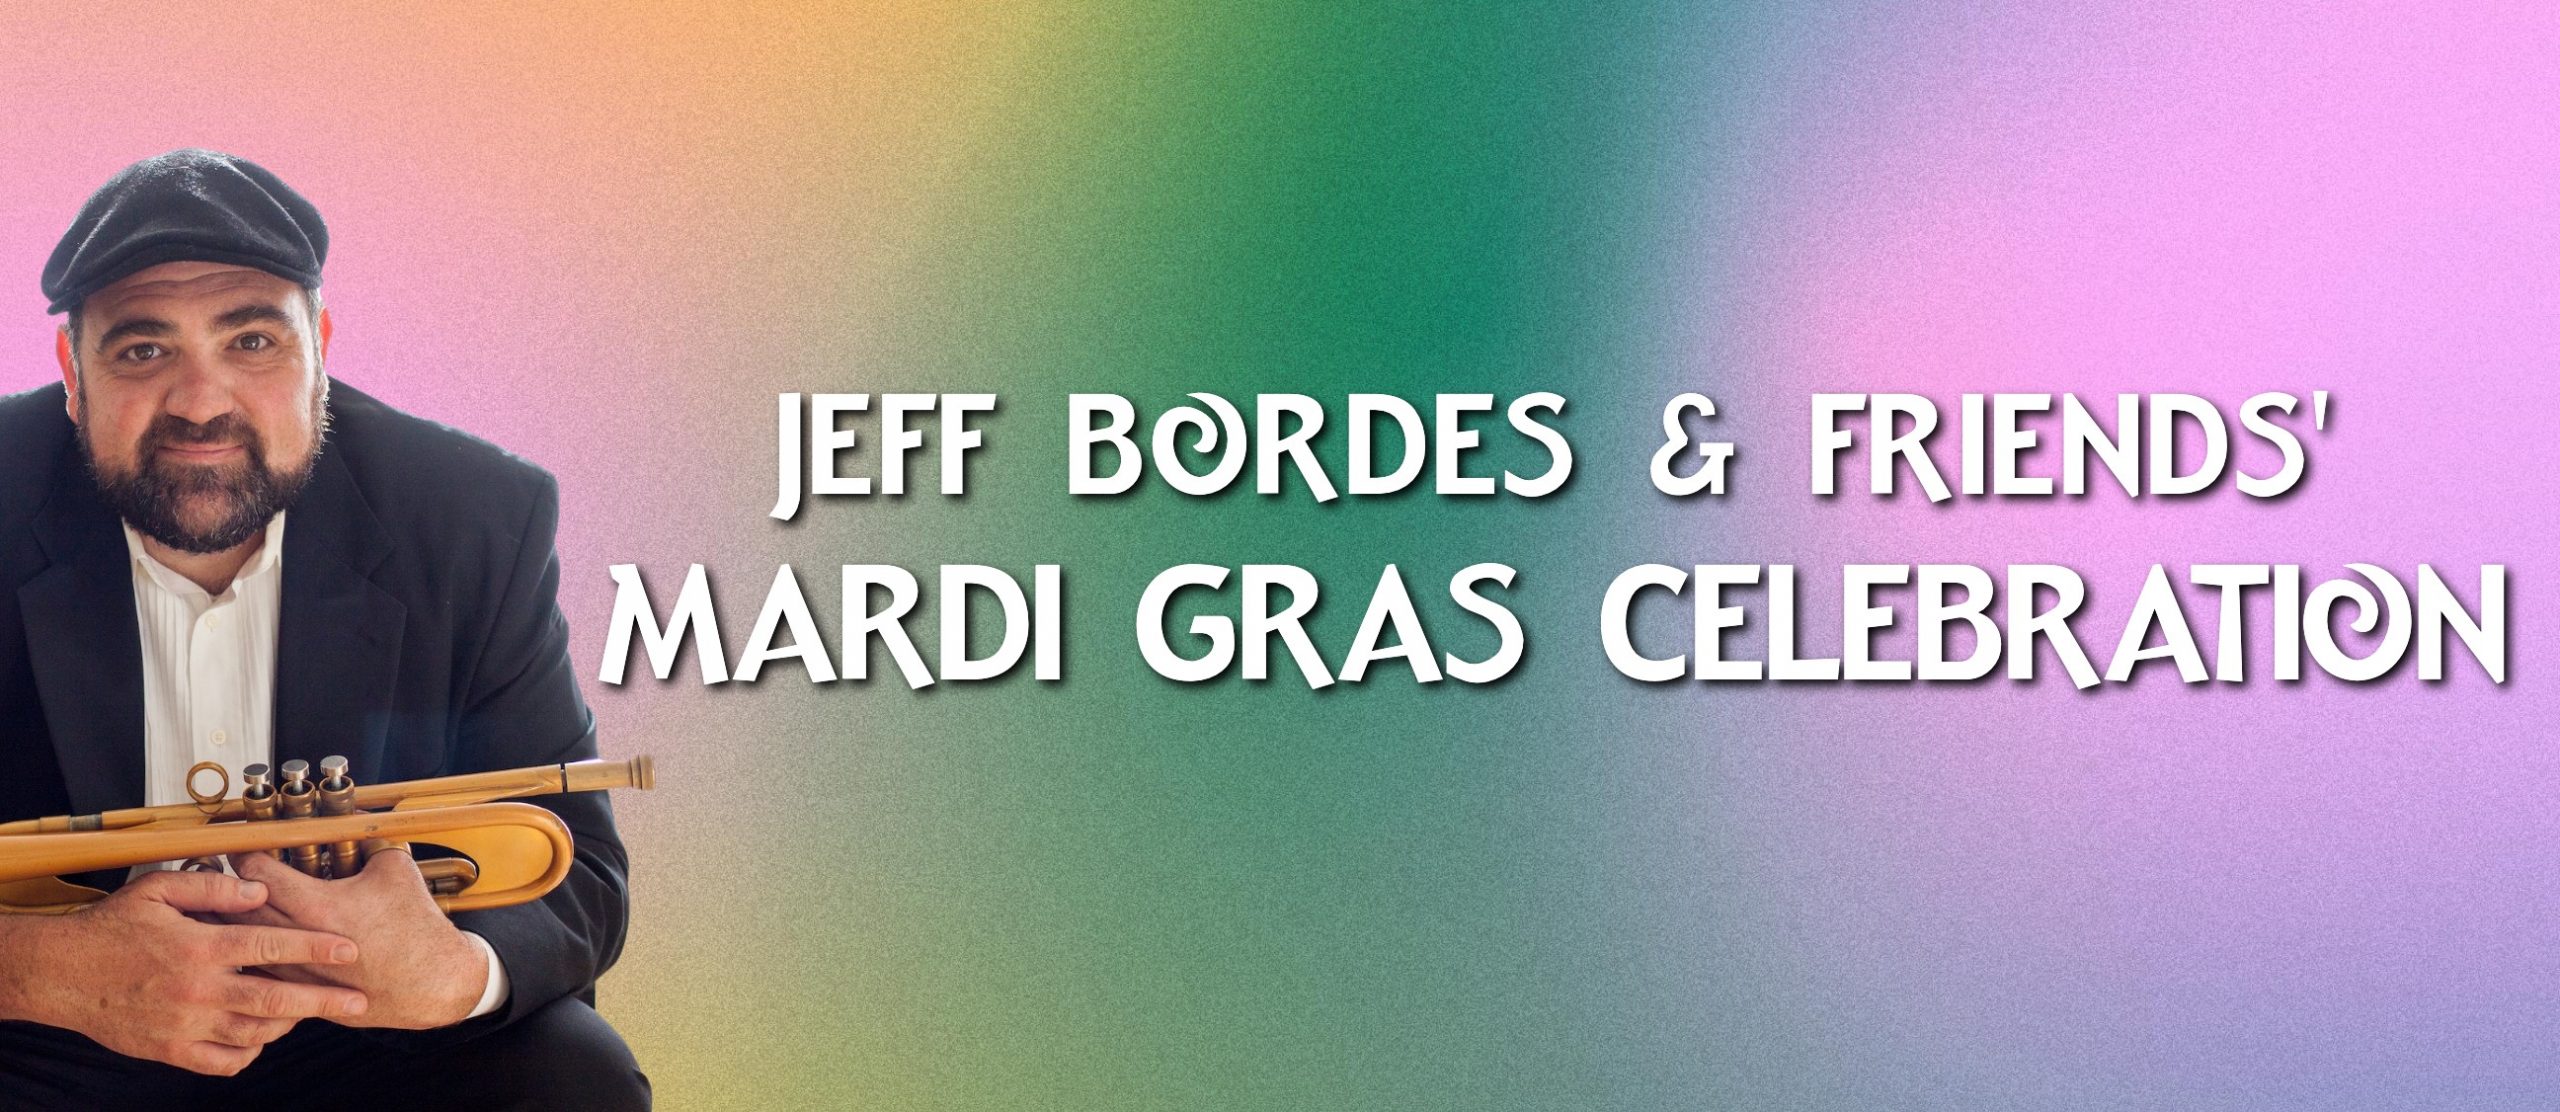 Jeff Bordes & Friends' Mardi Gras Celebration